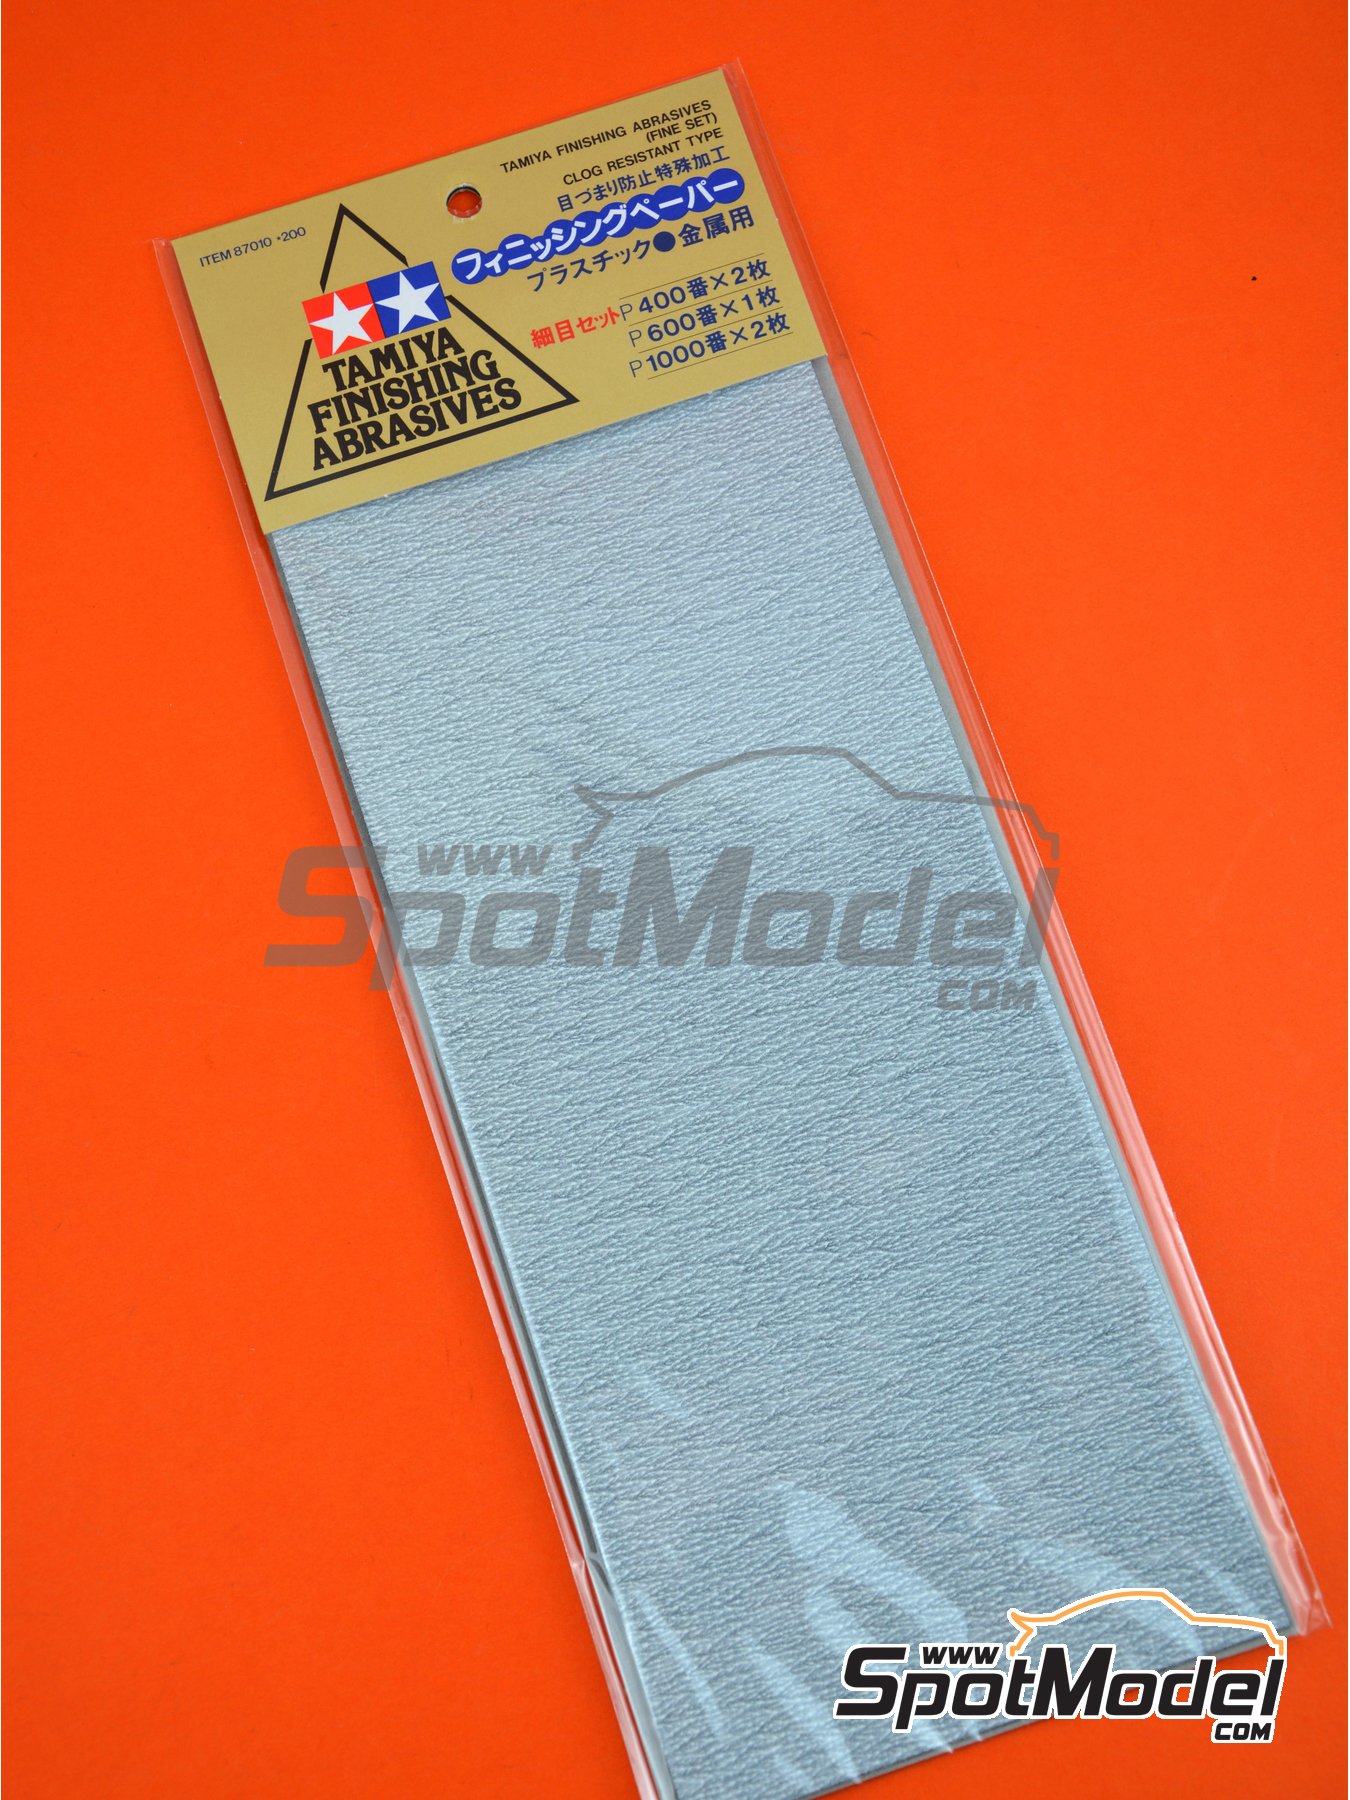 TAMIYA MODEL KIT TOOL CRAFT 87055 Finishing Abrasives Sand Paper P600 3pcs New 